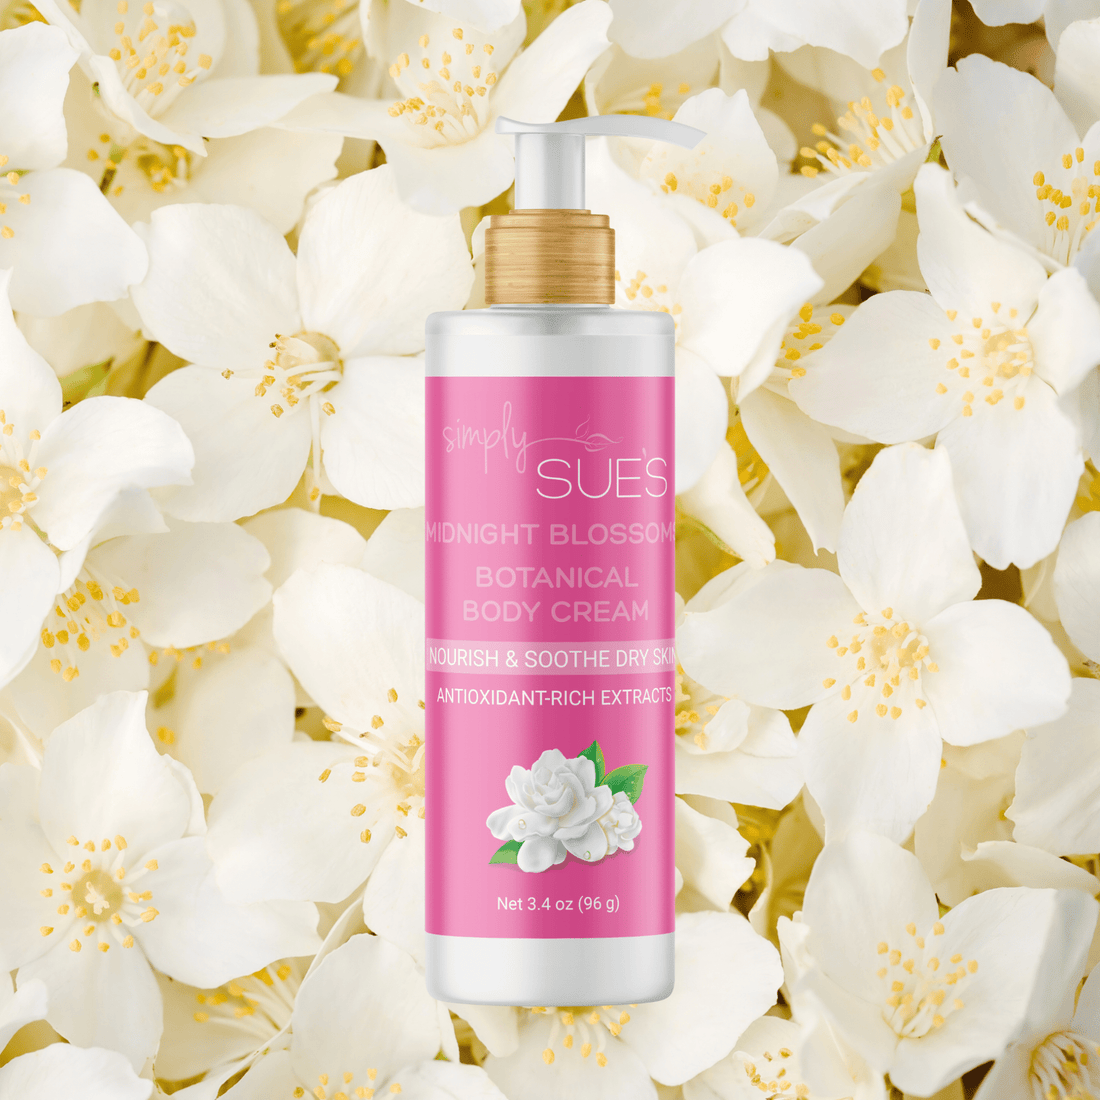 Simply Sue’s Midnight Blossom  Body Cream elegantly displayed on a background of fresh jasmine flowers